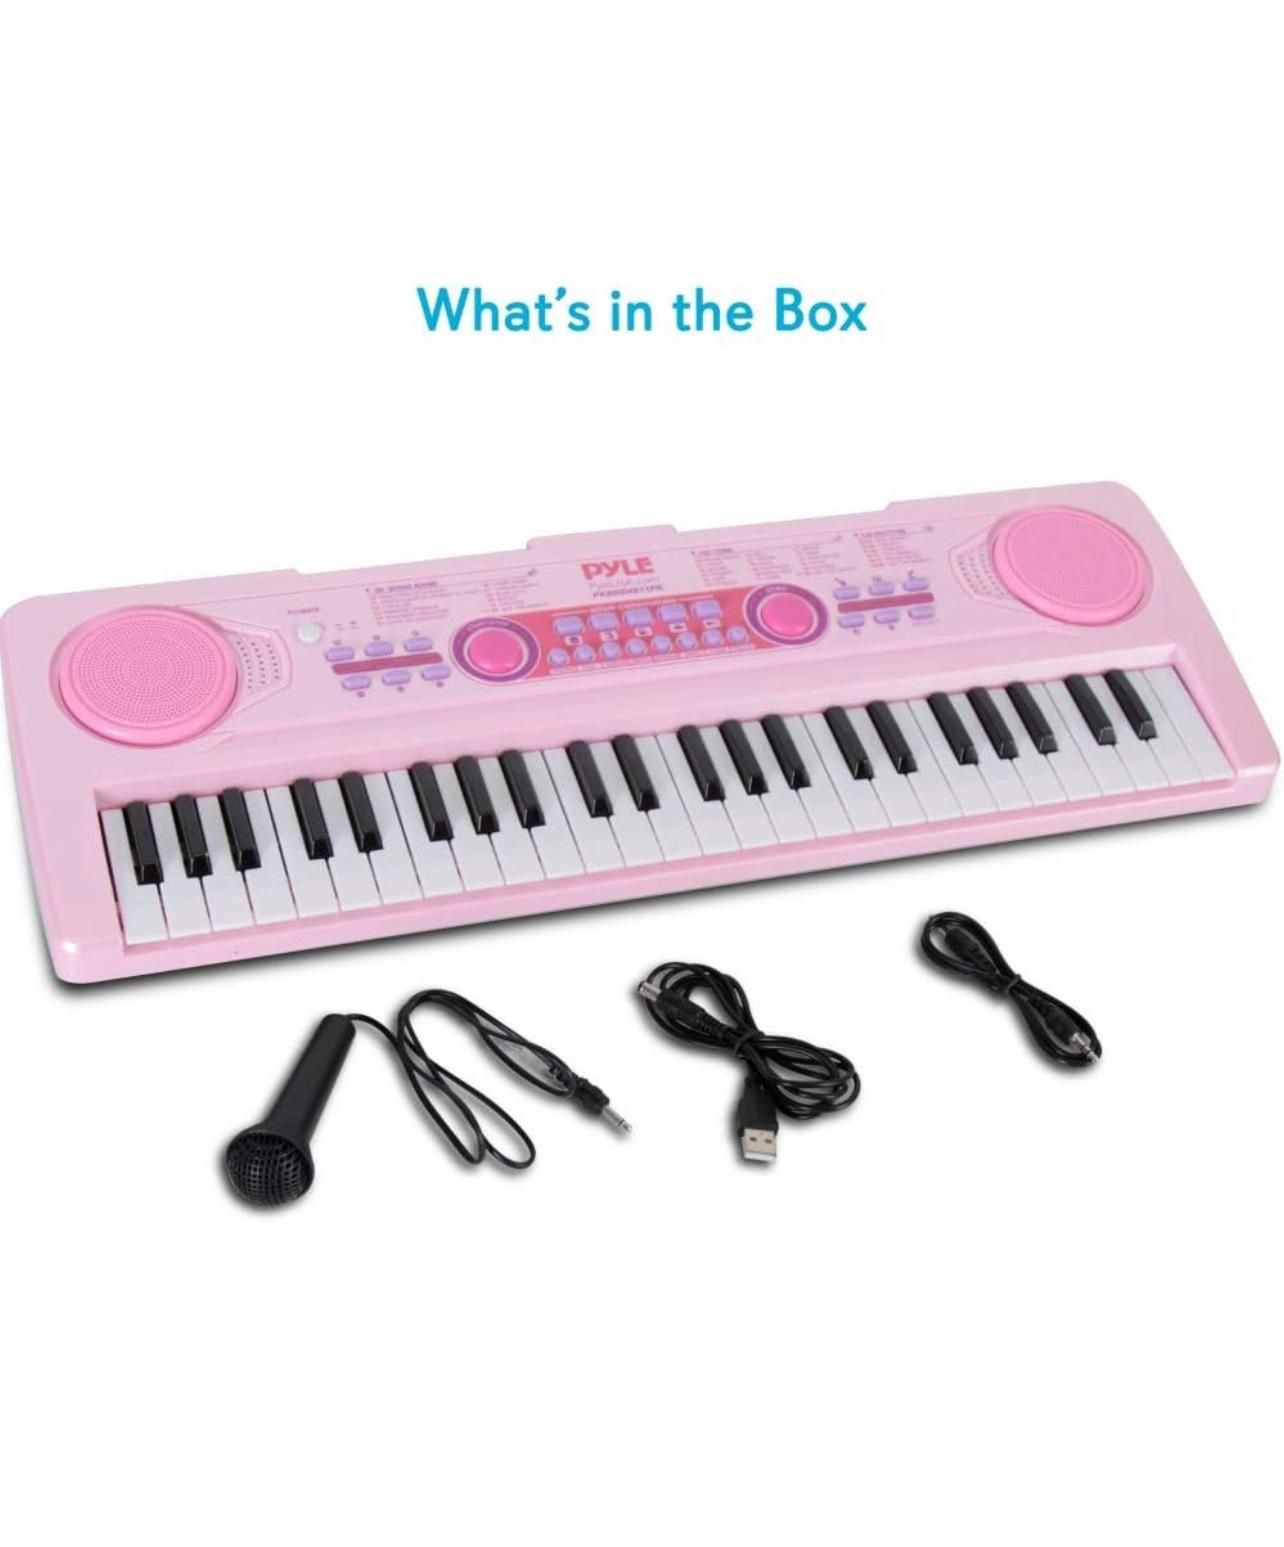 PYLE-PRO Electric Keyboard Piano for Kids-Portable 49 Key Electronic Musical Karaoke Keyboard, Learning Keyboard for Children w/Drum Pad, P#1041 